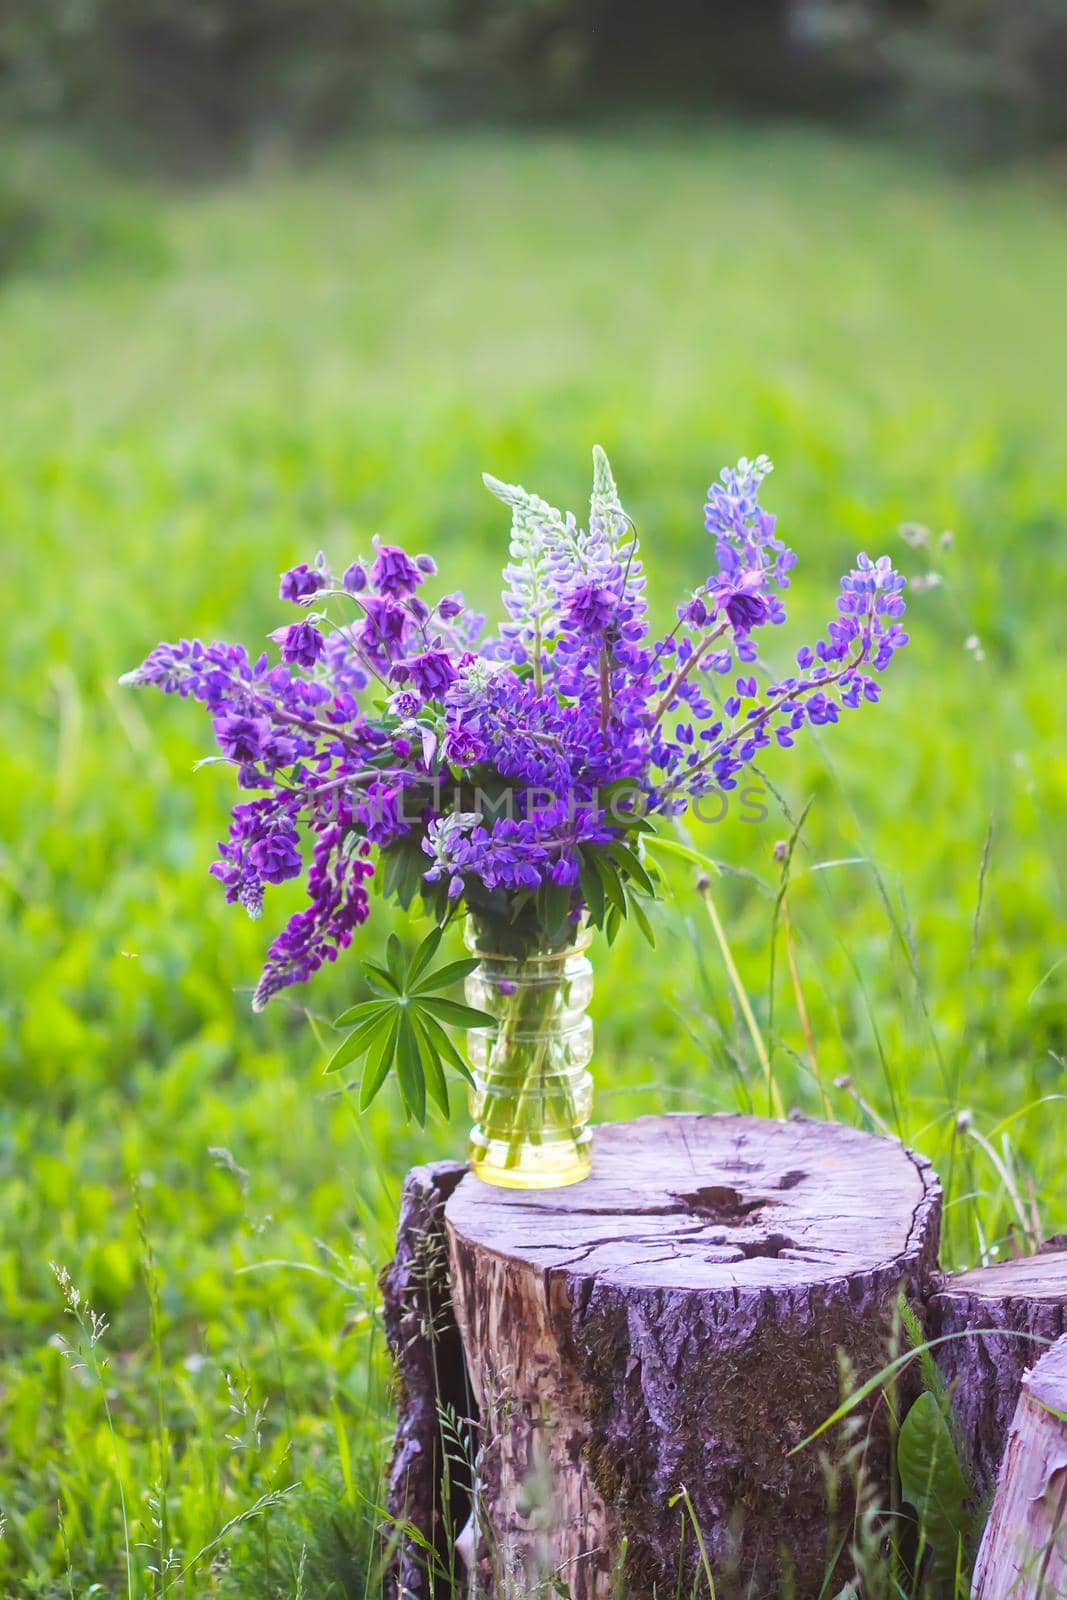 Bouquet of summer flowers on tree stump. Large-leaved or Bigleaf Lupine purple flowers. Lupinus polyphyllus plants.